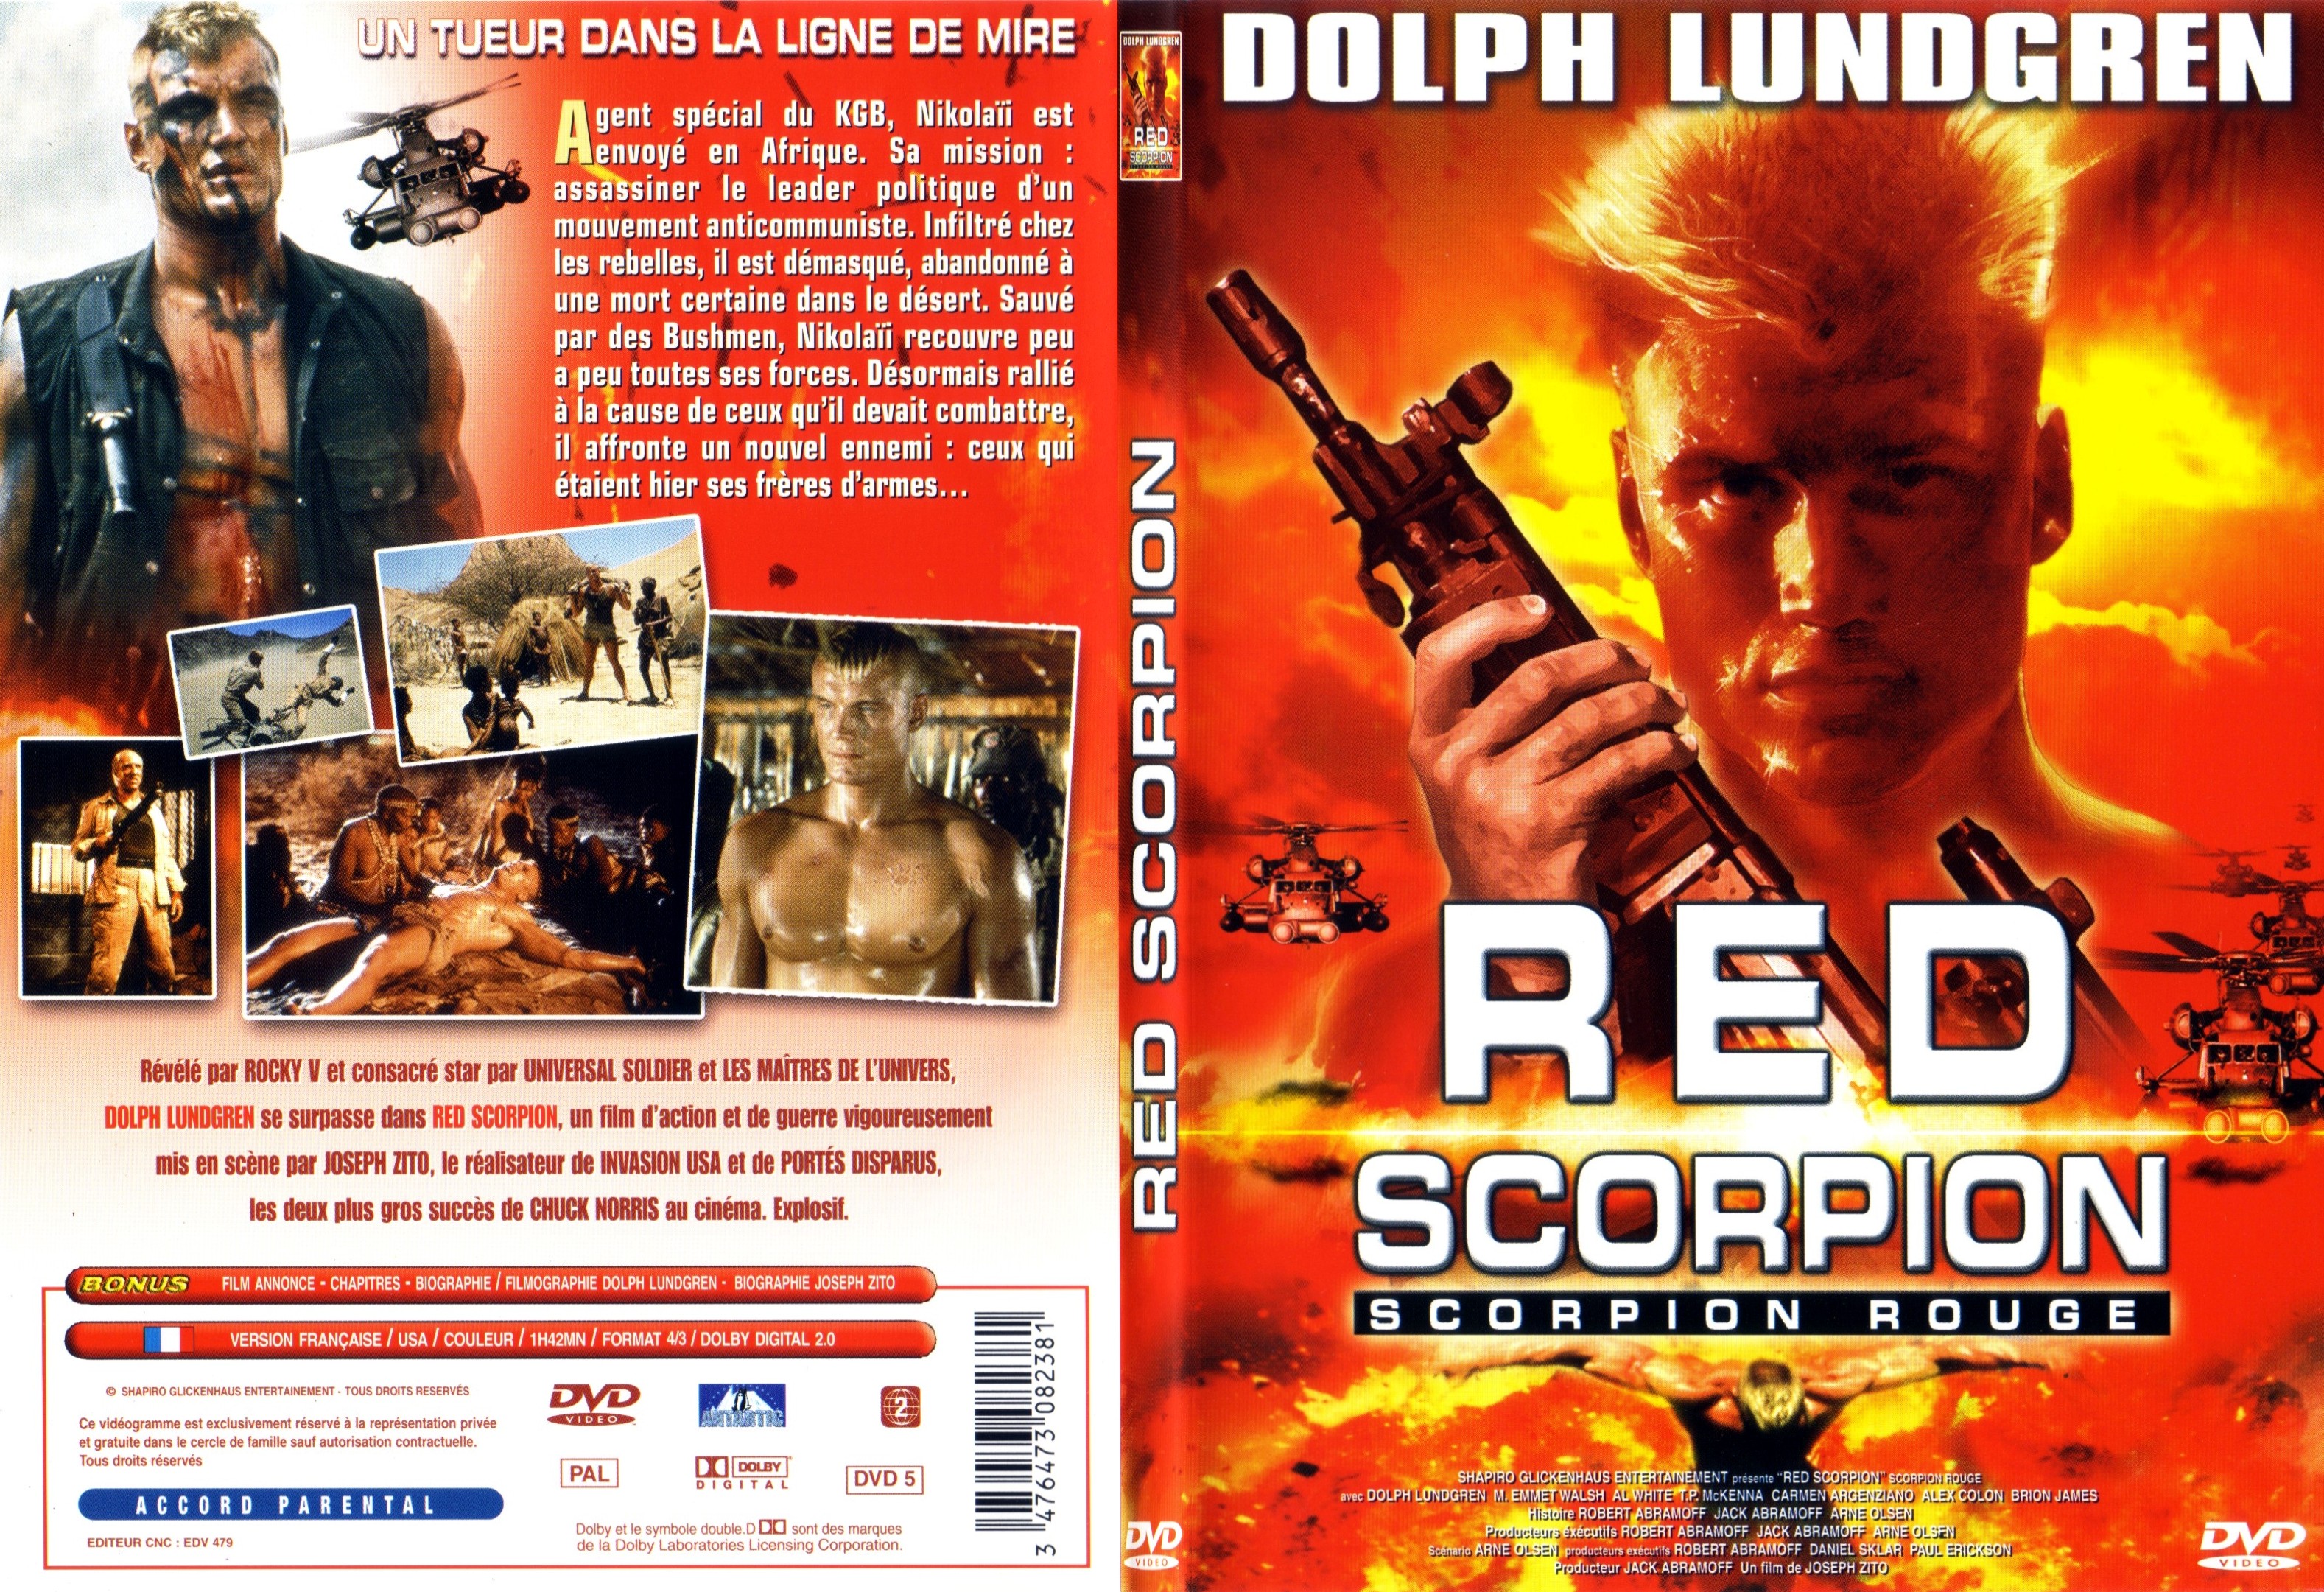 Jaquette DVD Red scorpion - SLIM